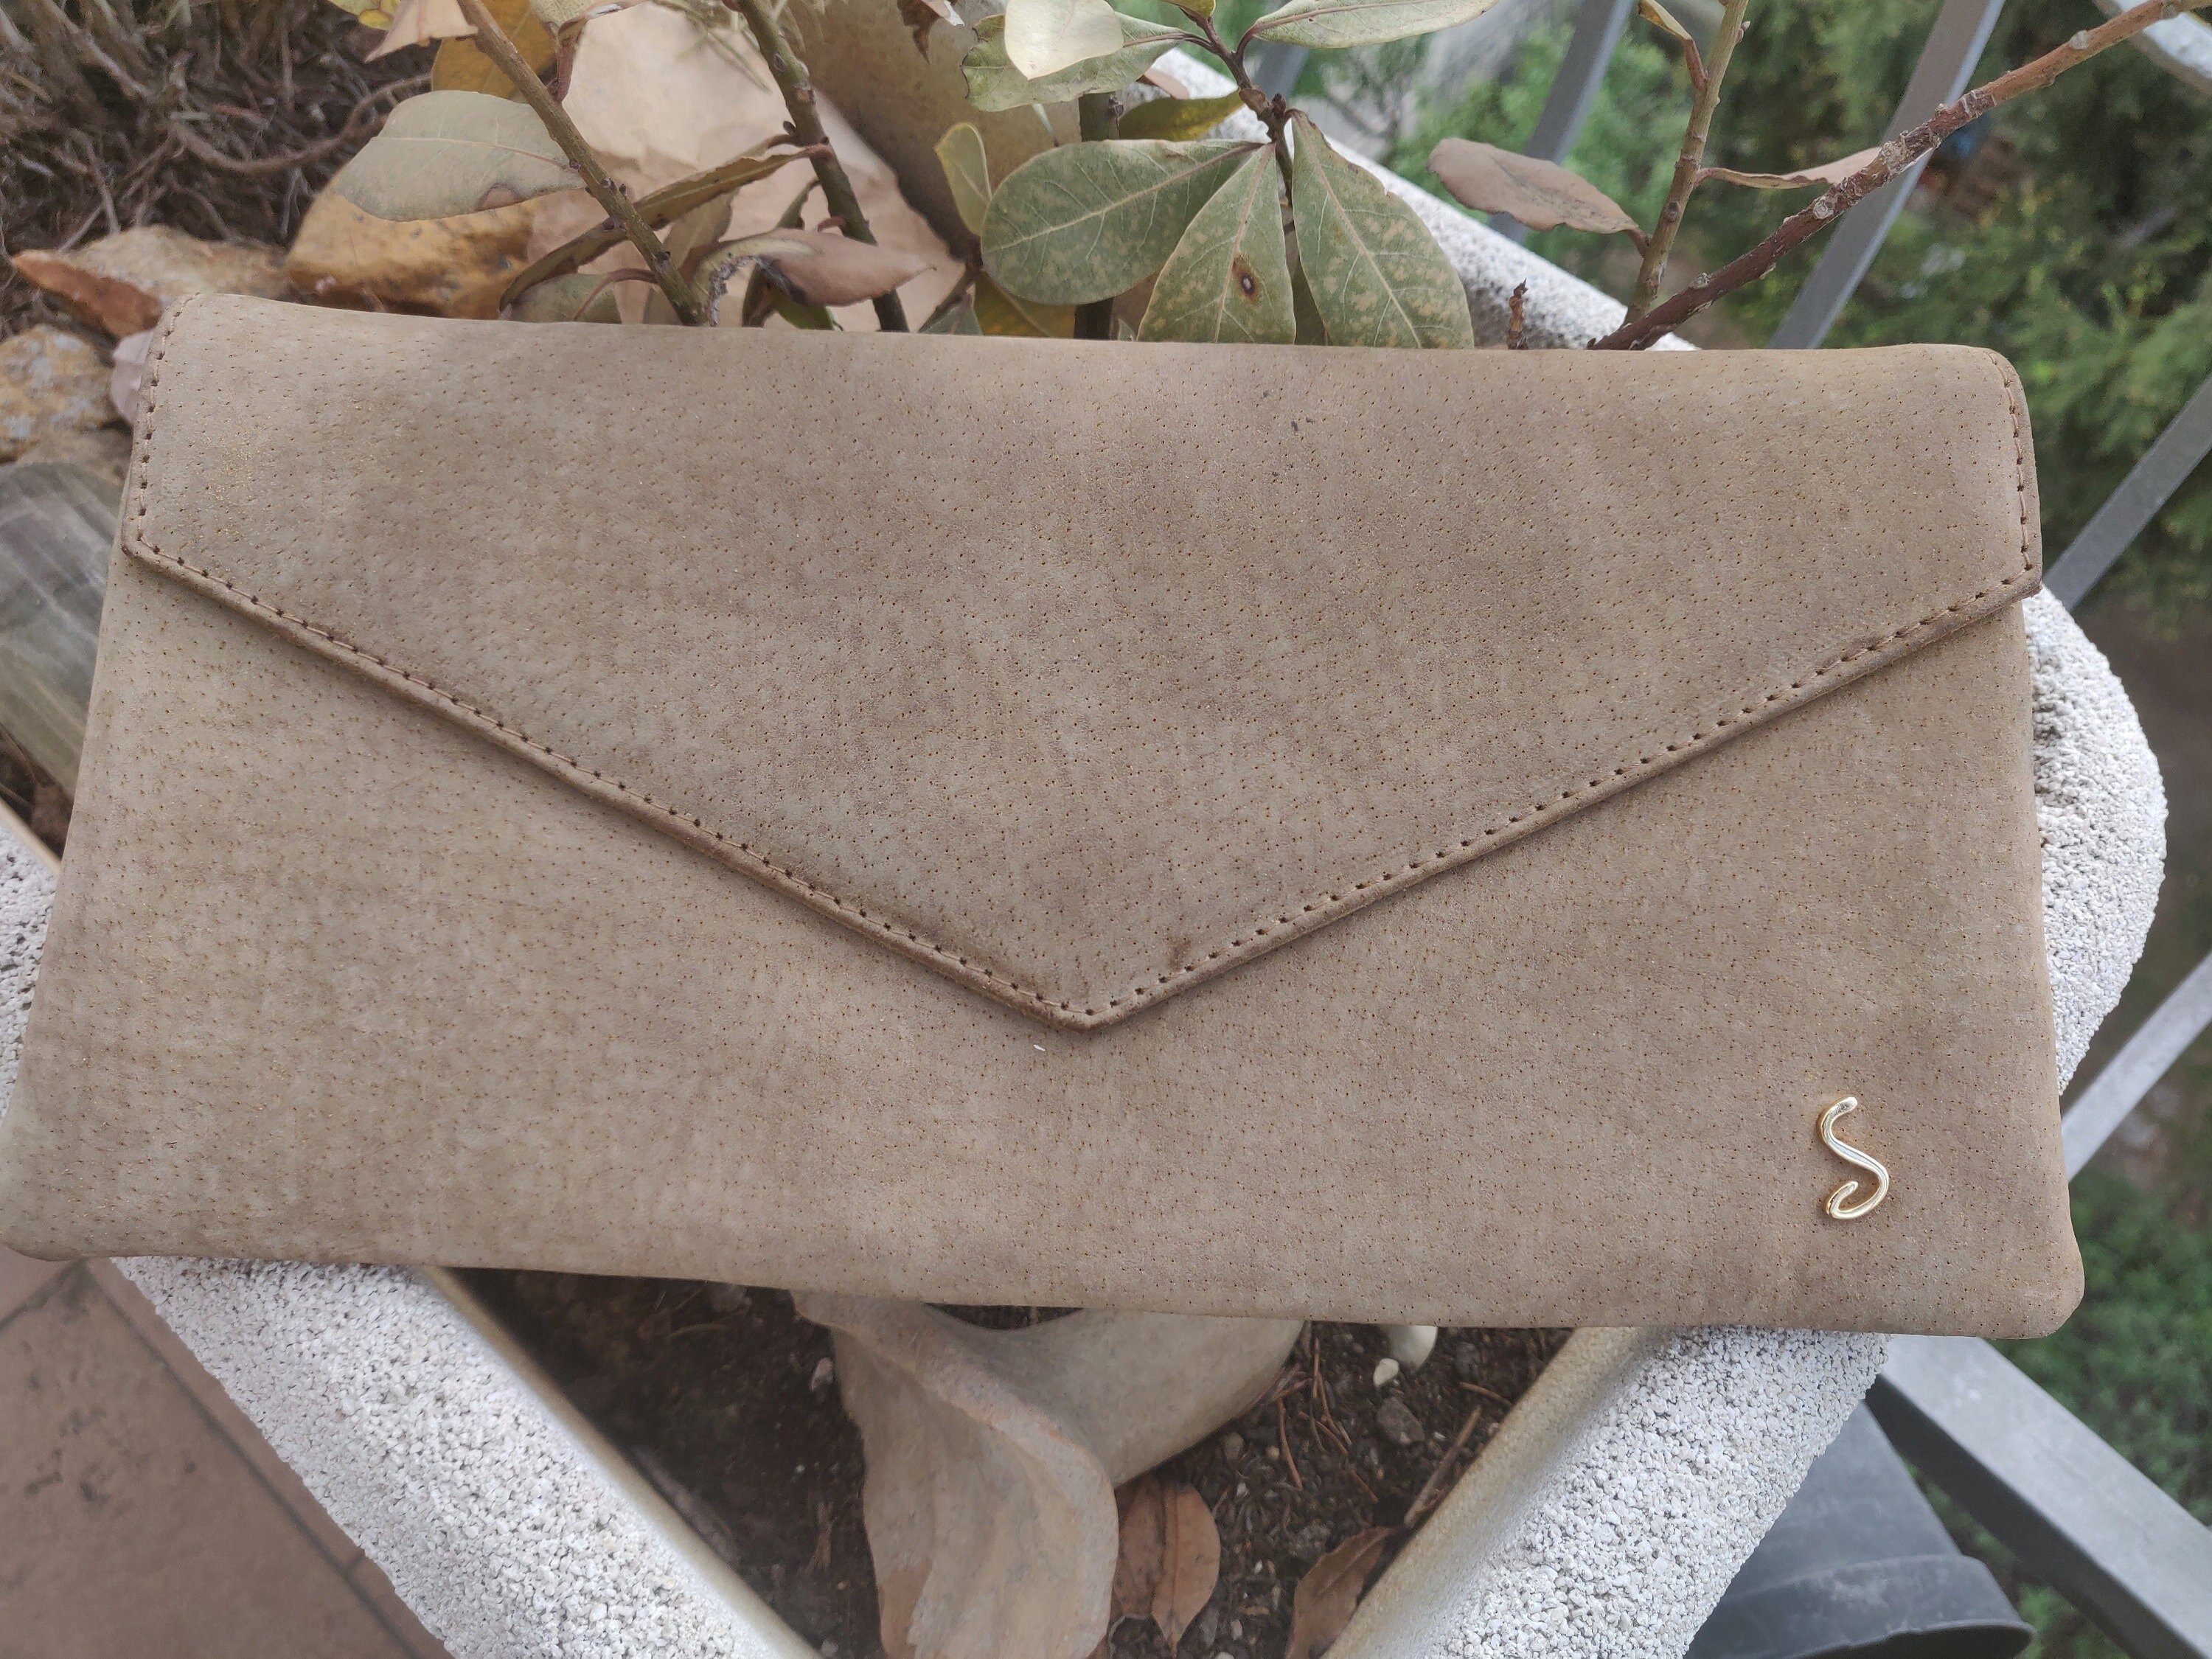 HZEWLS Chain Evening Bag Simple Texture Female Clutch Bag Casual Fashion  Handheld Purse (Beige) 